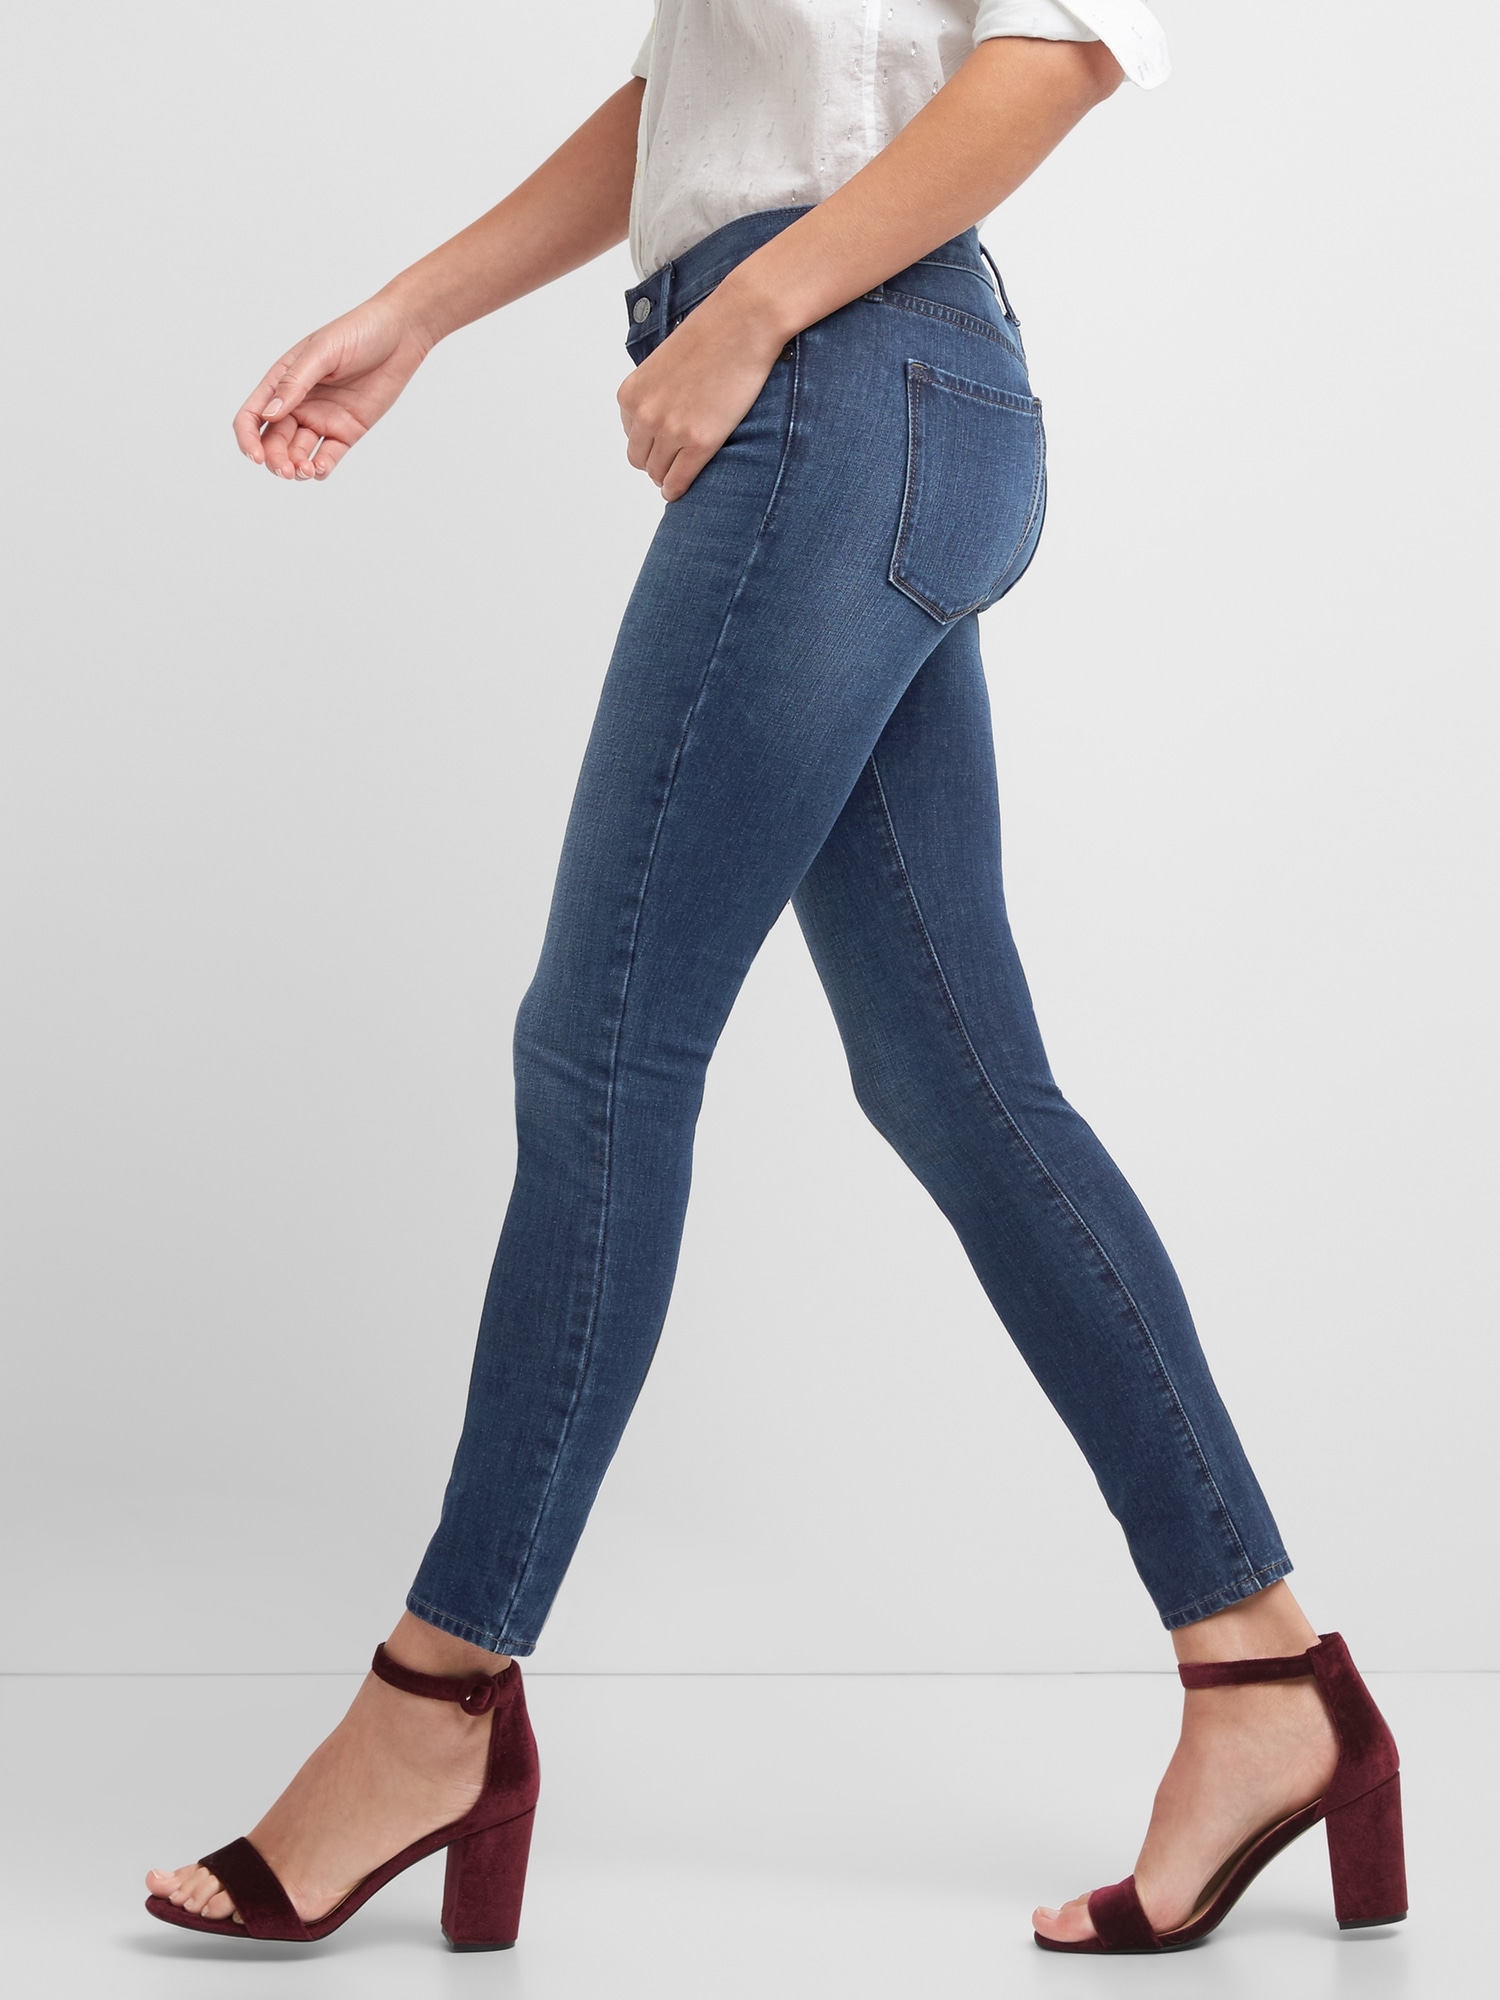 Mid Rise True Skinny Jeans in Super Slimming